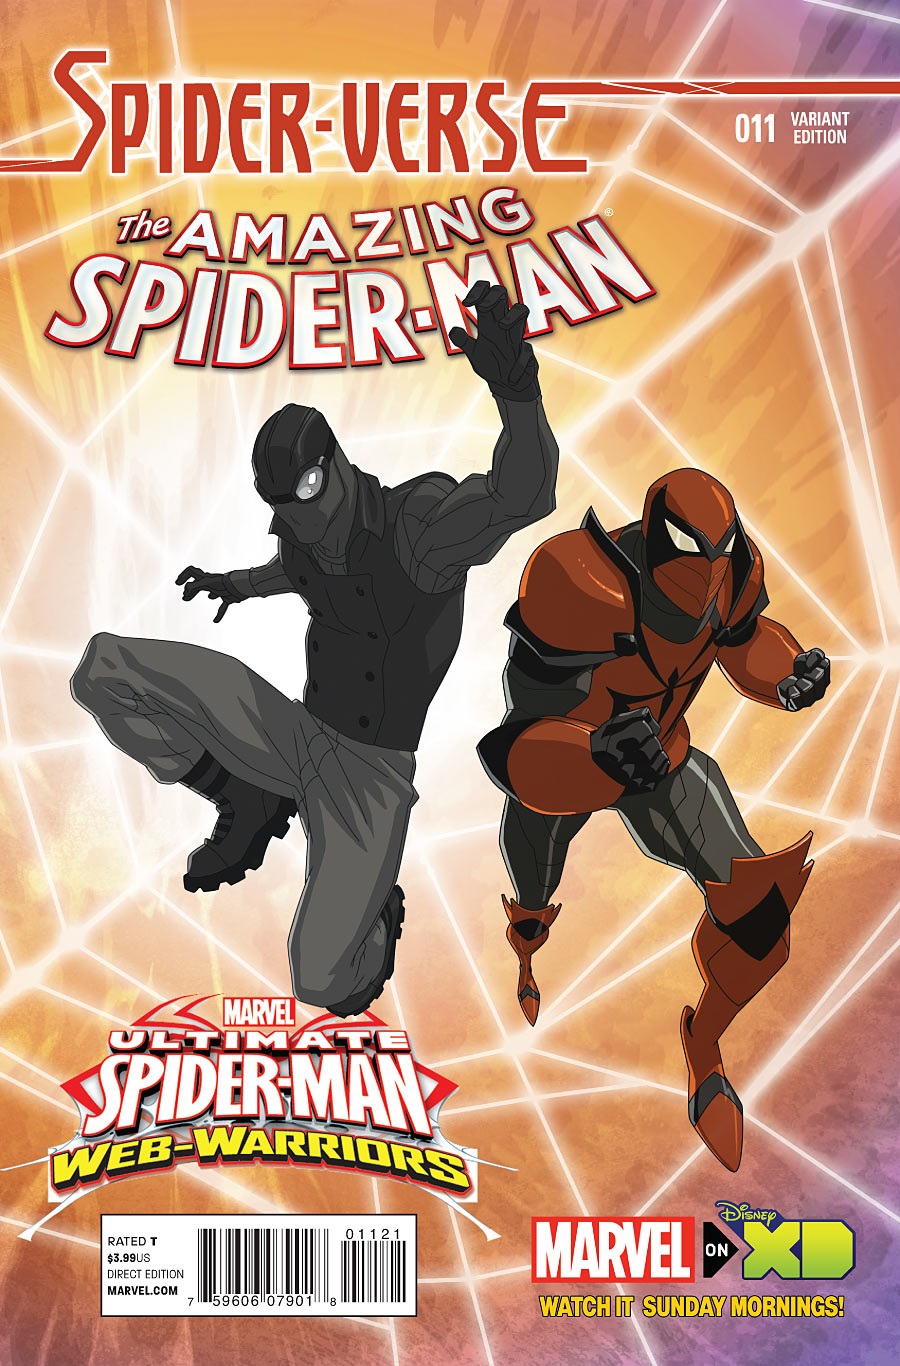 The Amazing Spider-Man #11